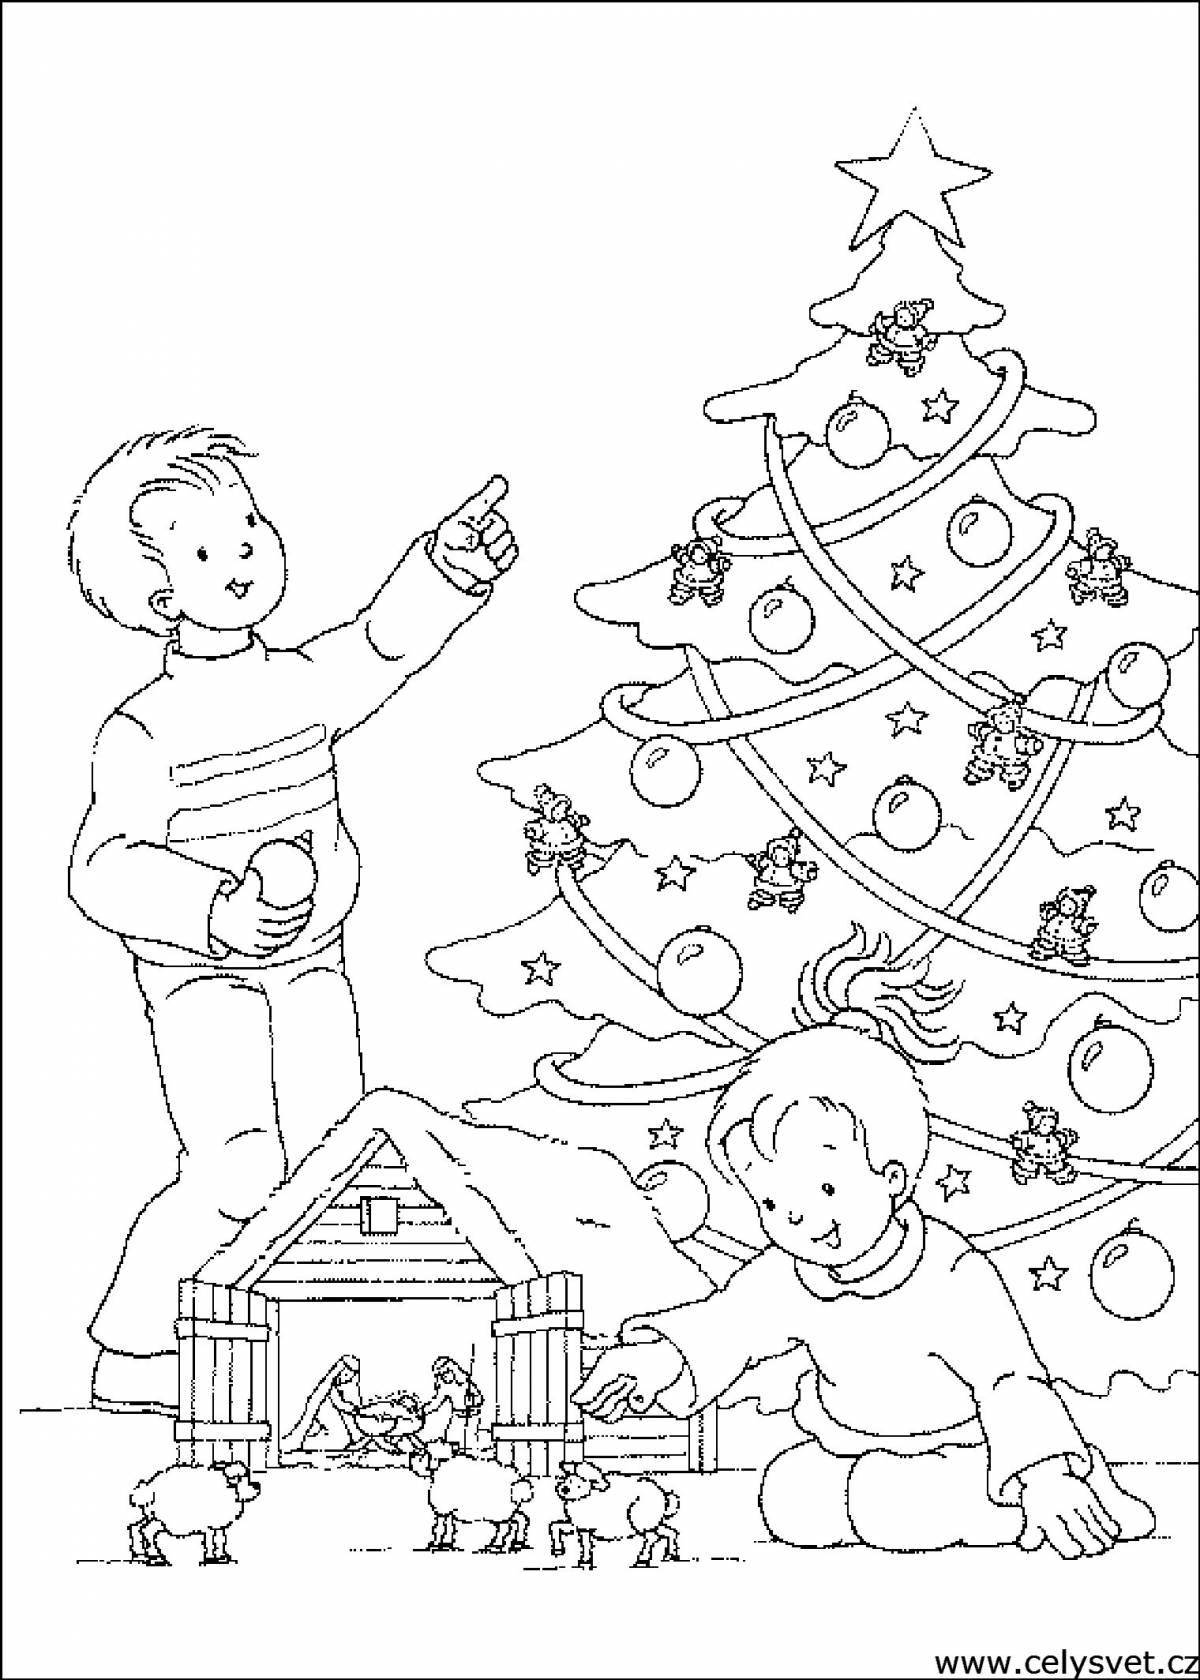 Joyful children decorate the tree